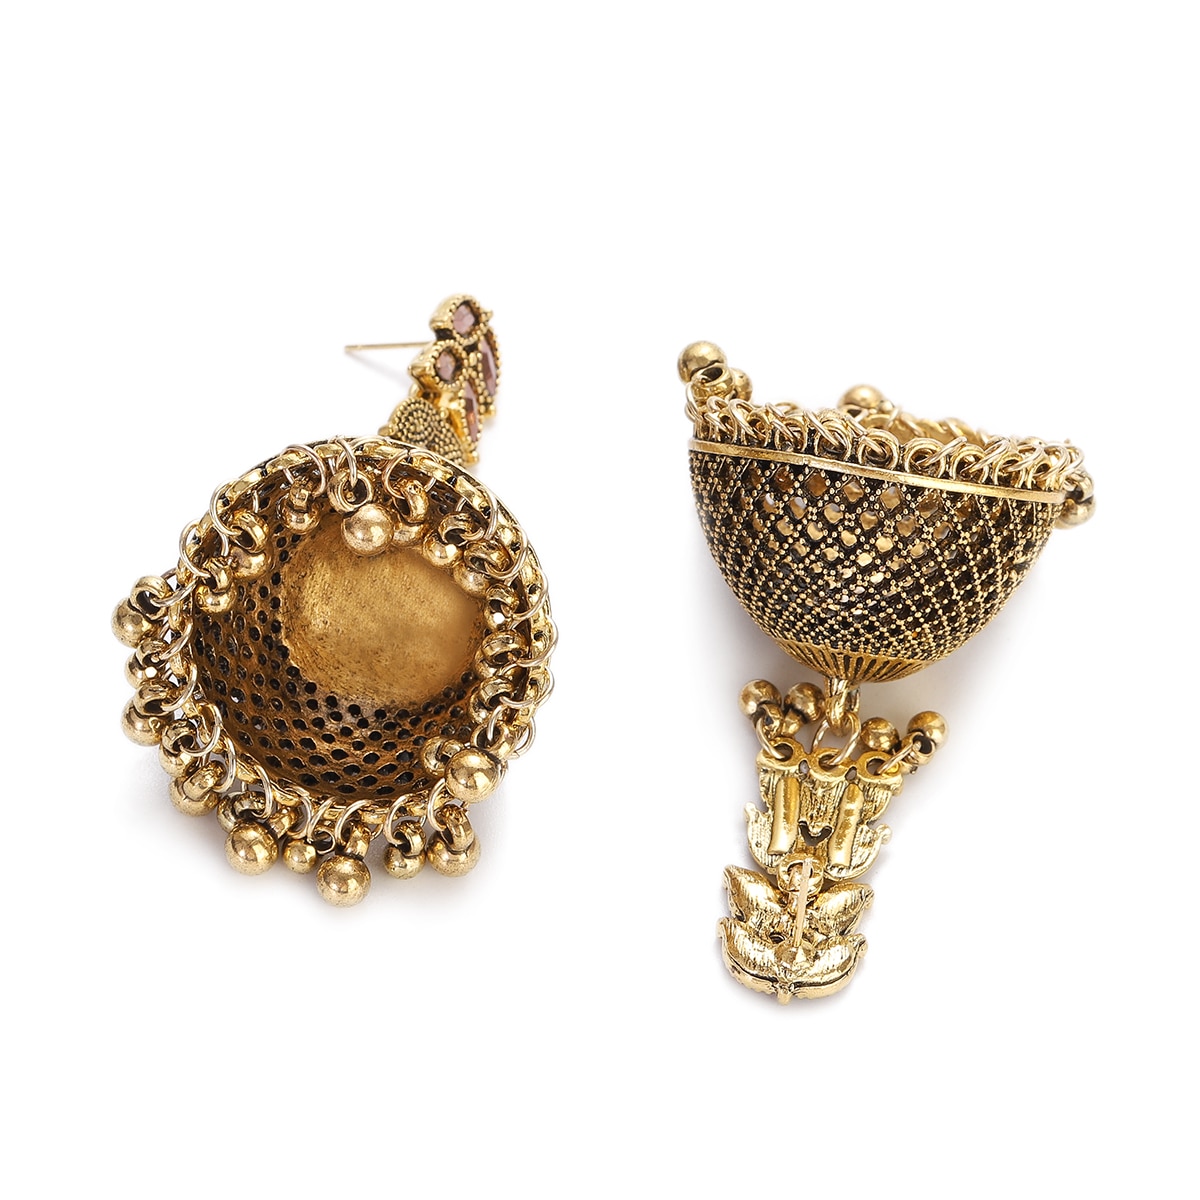 Ethnic-Big-Gold-Color-Indian-Jhumka-Earrings-For-Women-Pendient-Retro-Bells-Tibetan-Earrings-Oorbell-1005004736828927-4